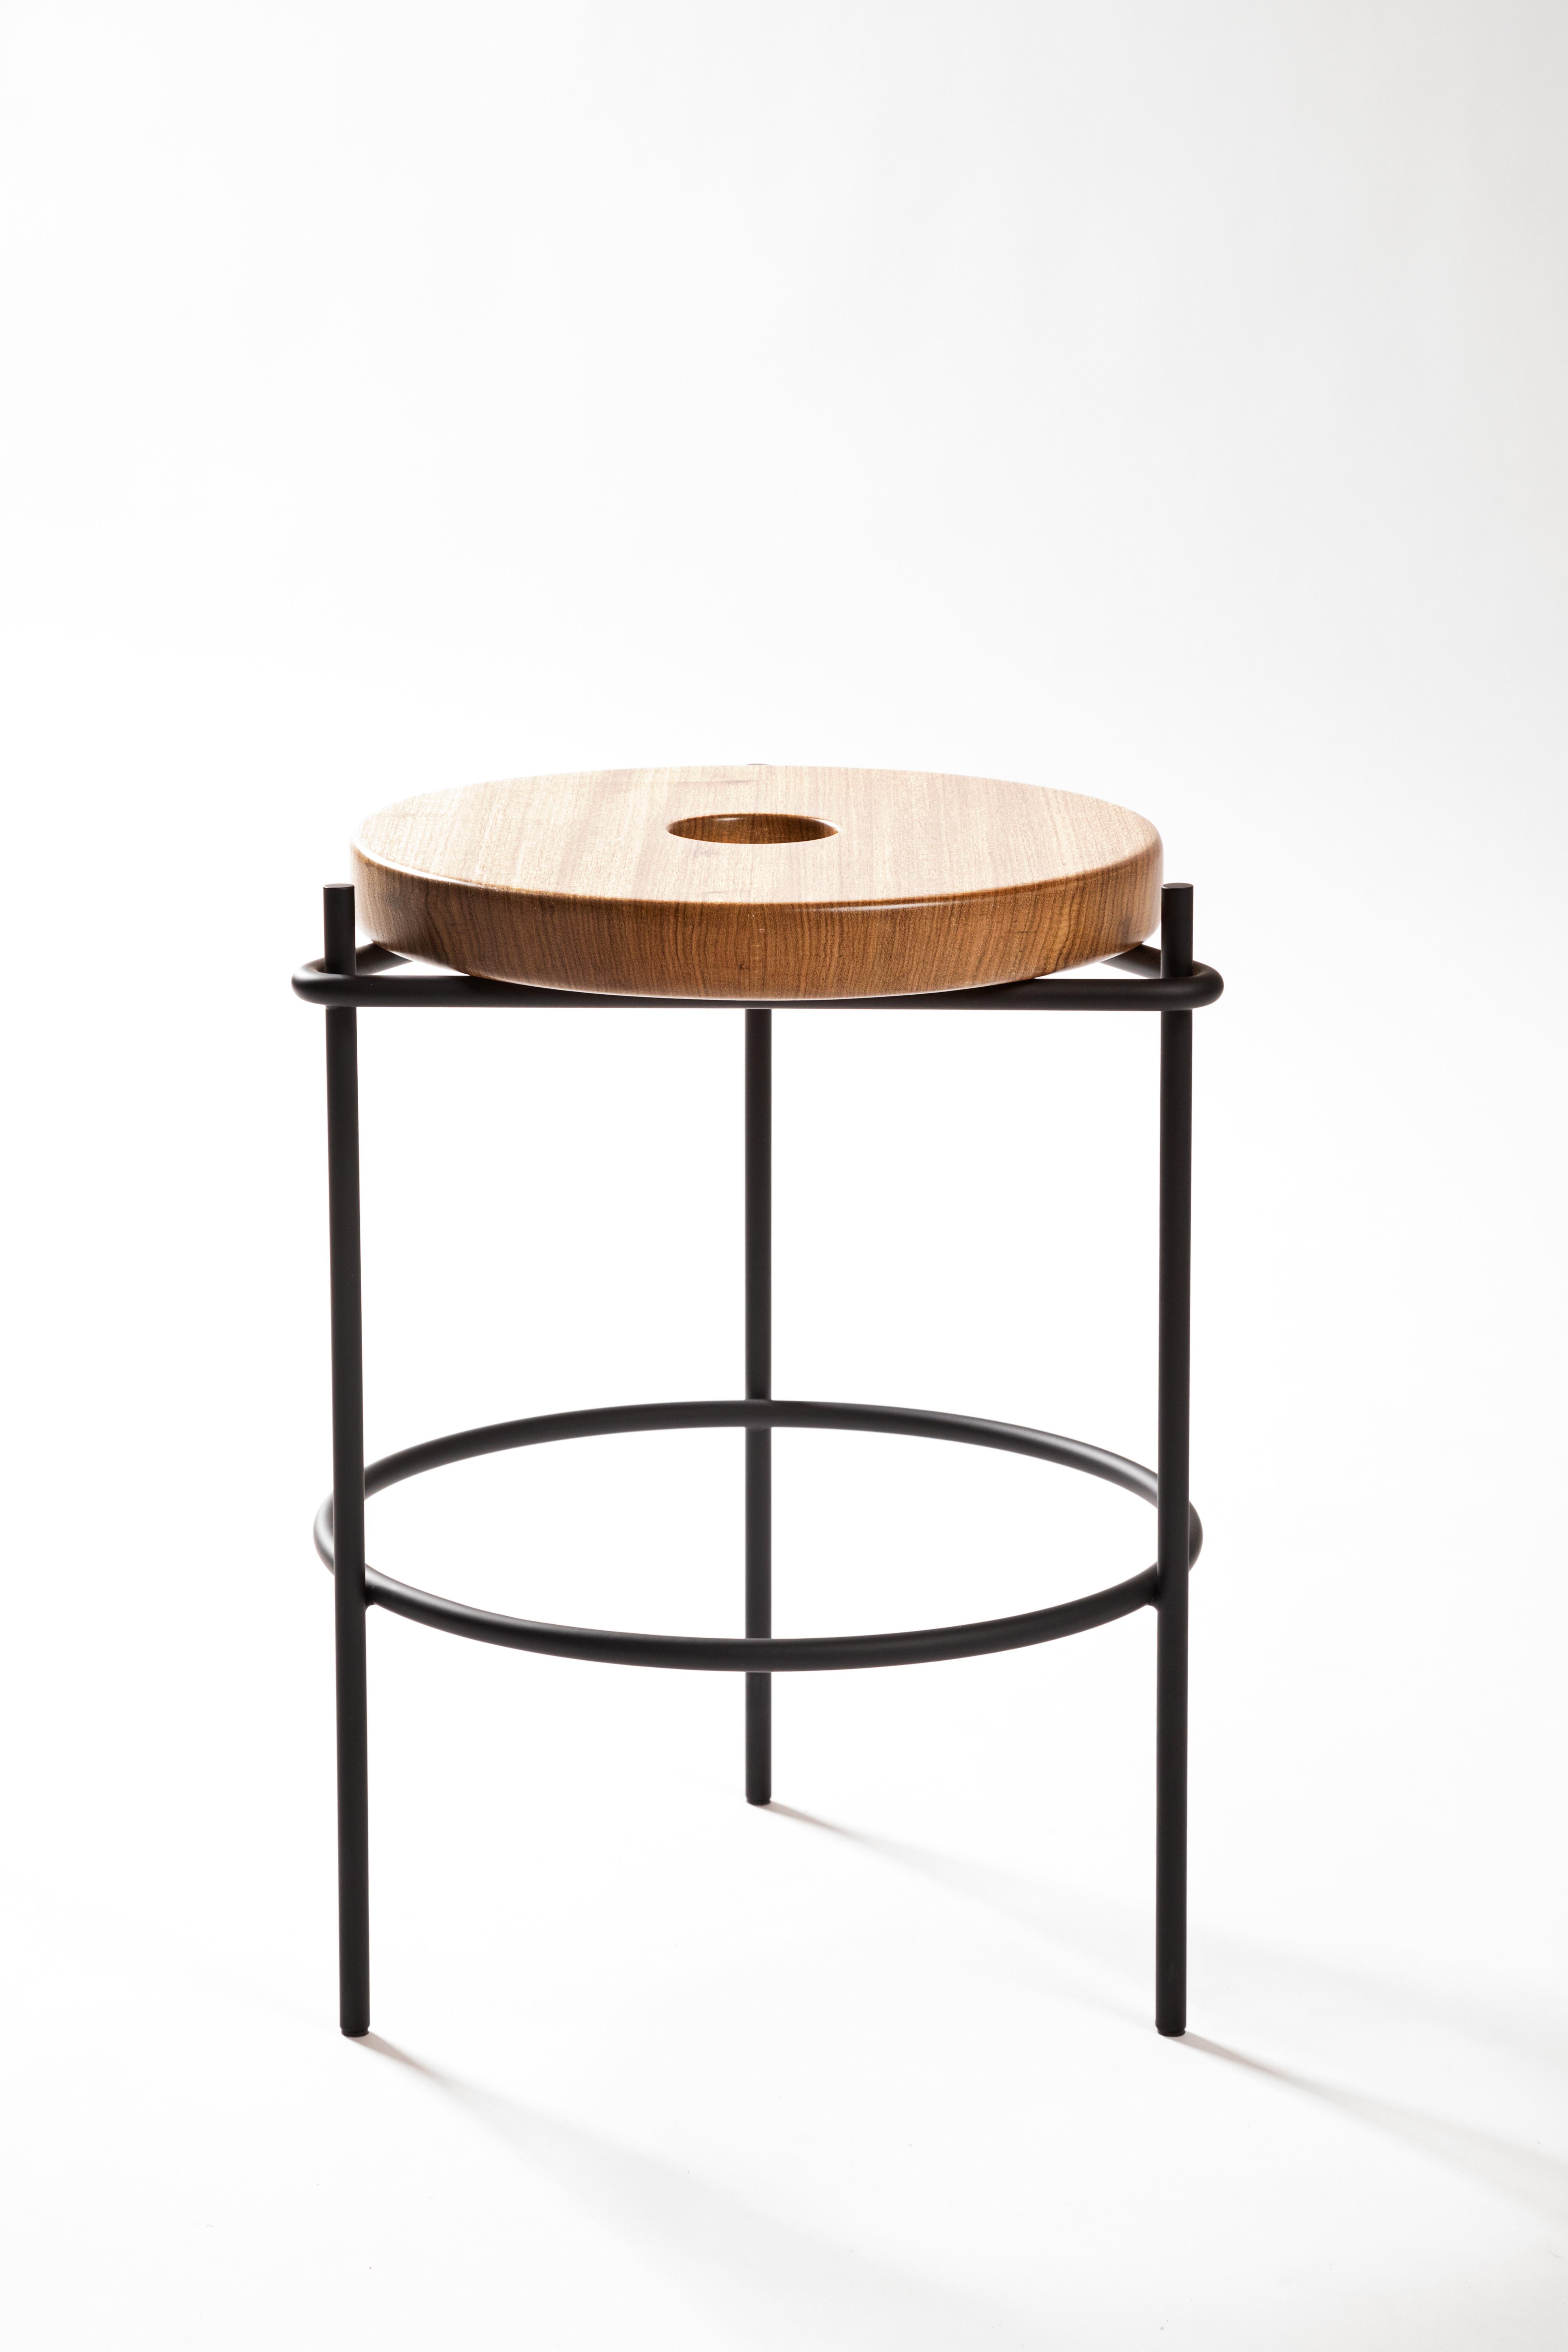 This versatile minimalist stool in solid Brazilian wood 